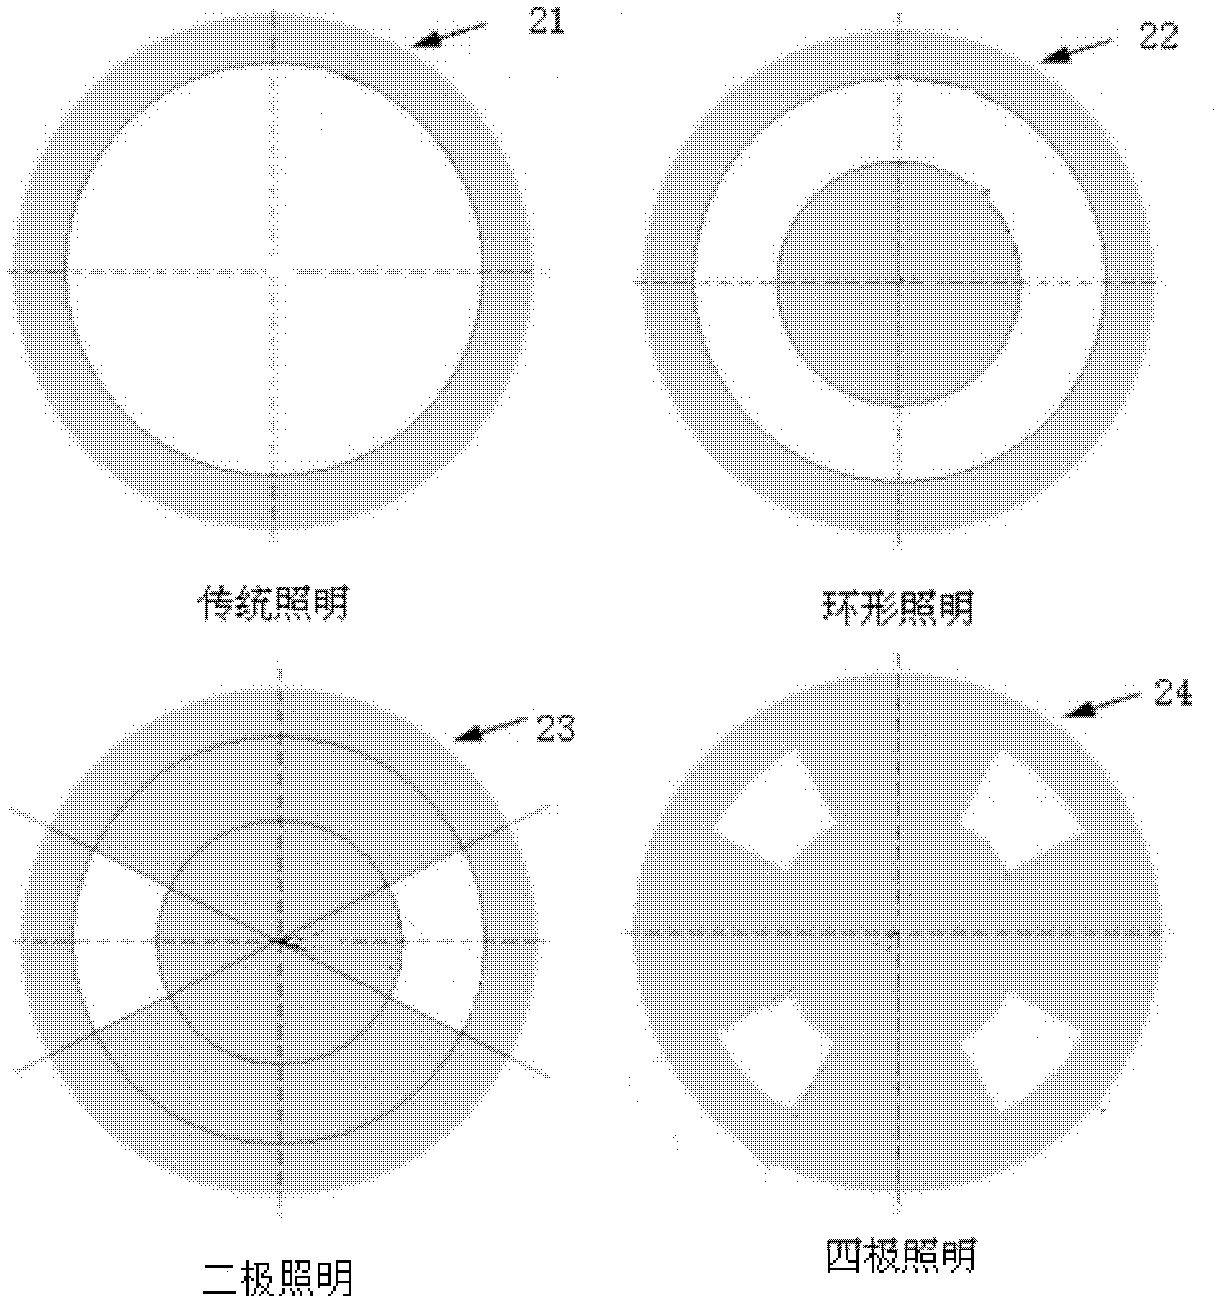 Adaptive centering wave aberration detection method of projection lens in mask aligner